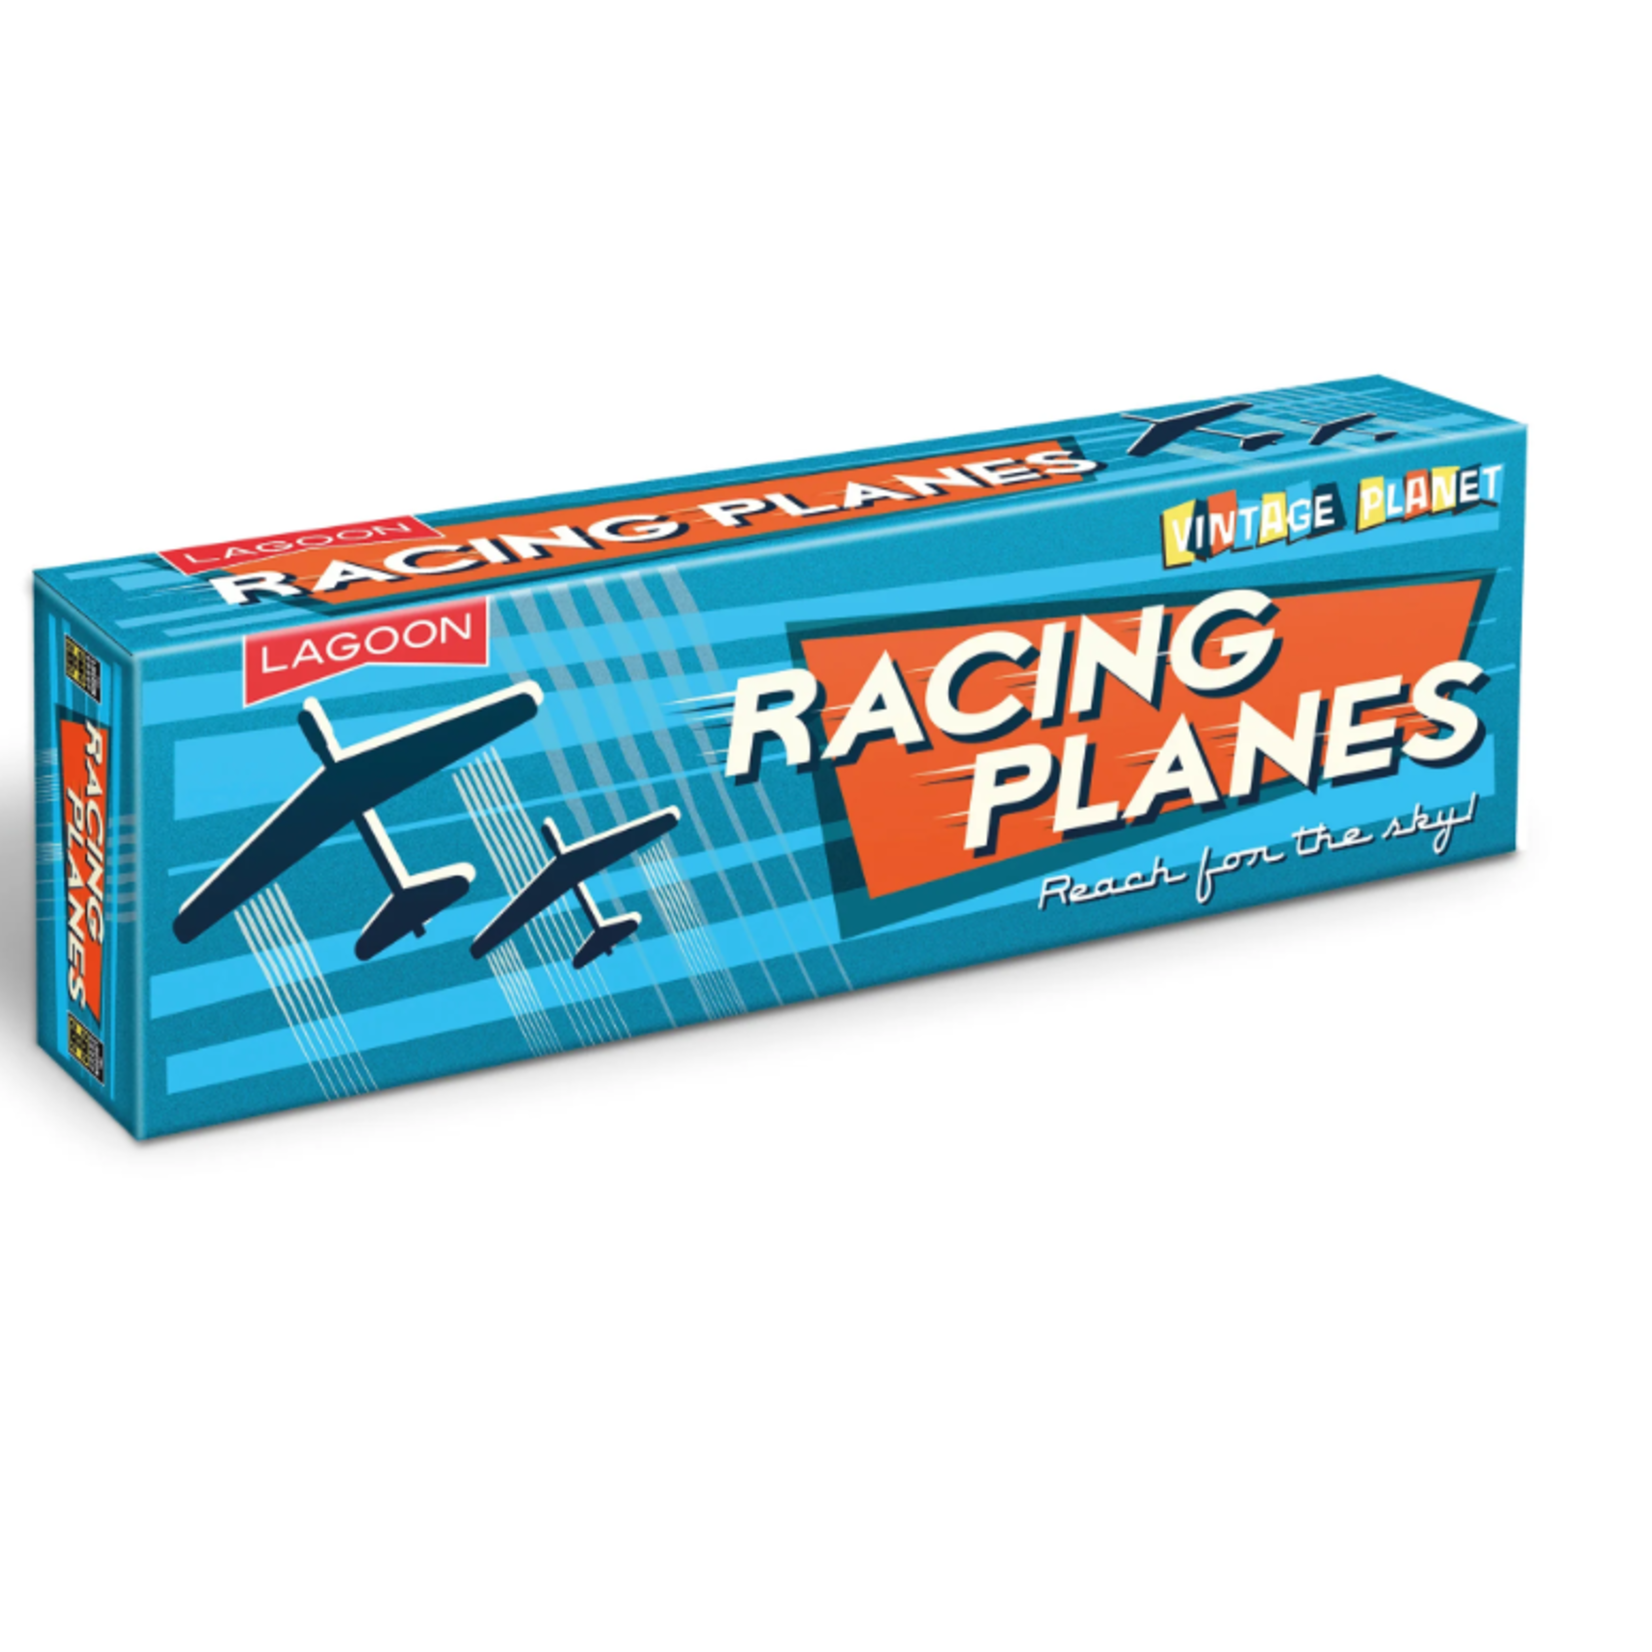 University Games Vintage Racing Planes